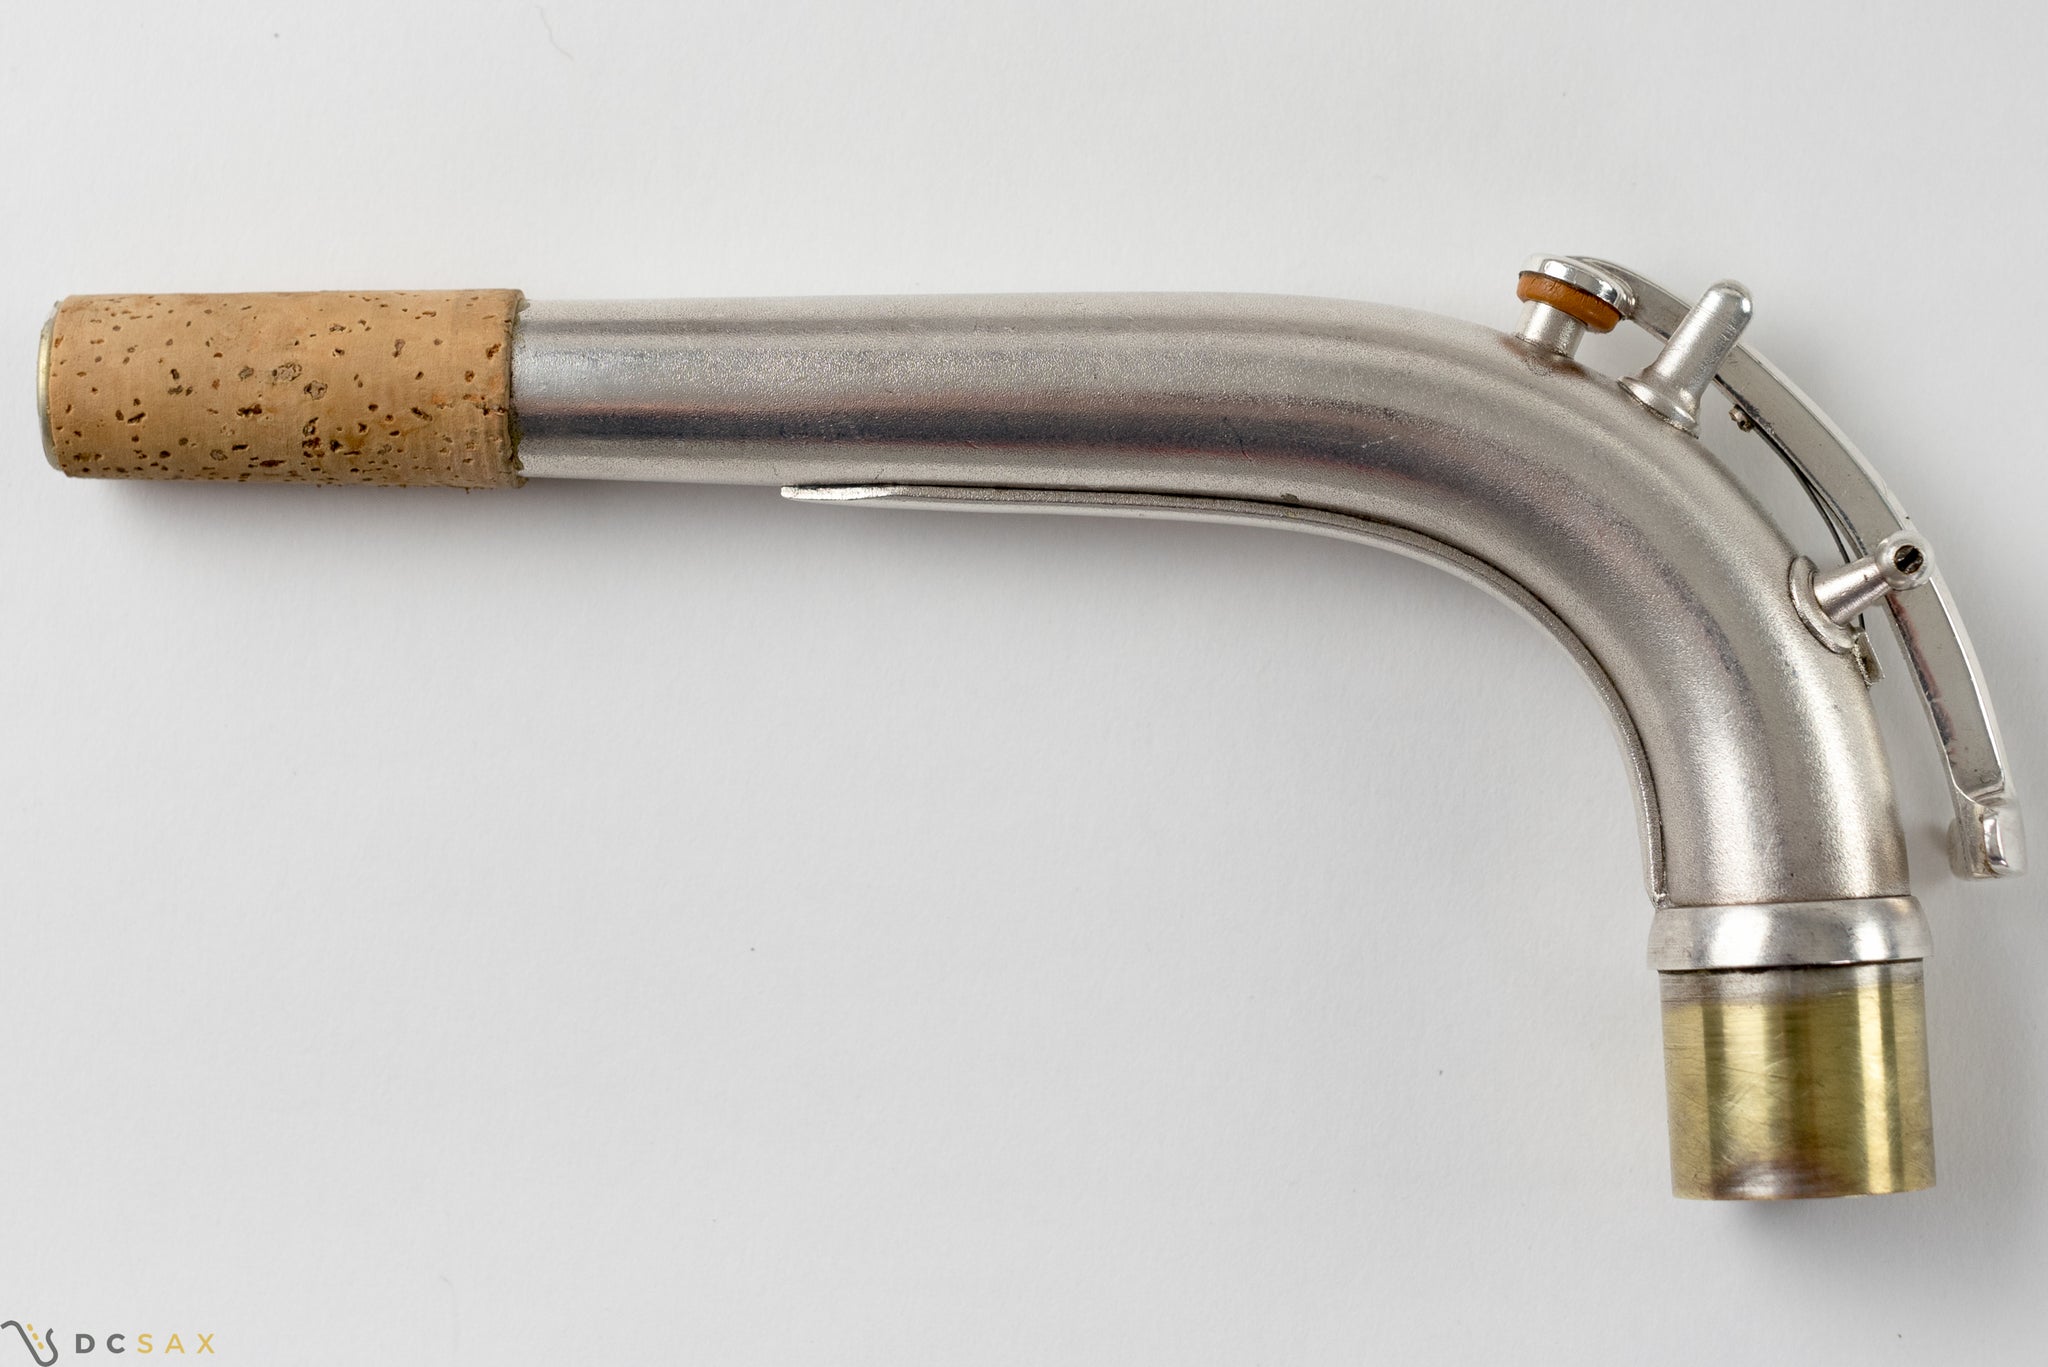 1945 Conn 12M Baritone Saxophone, Silver, Rolled Tone Holes, Overhaul